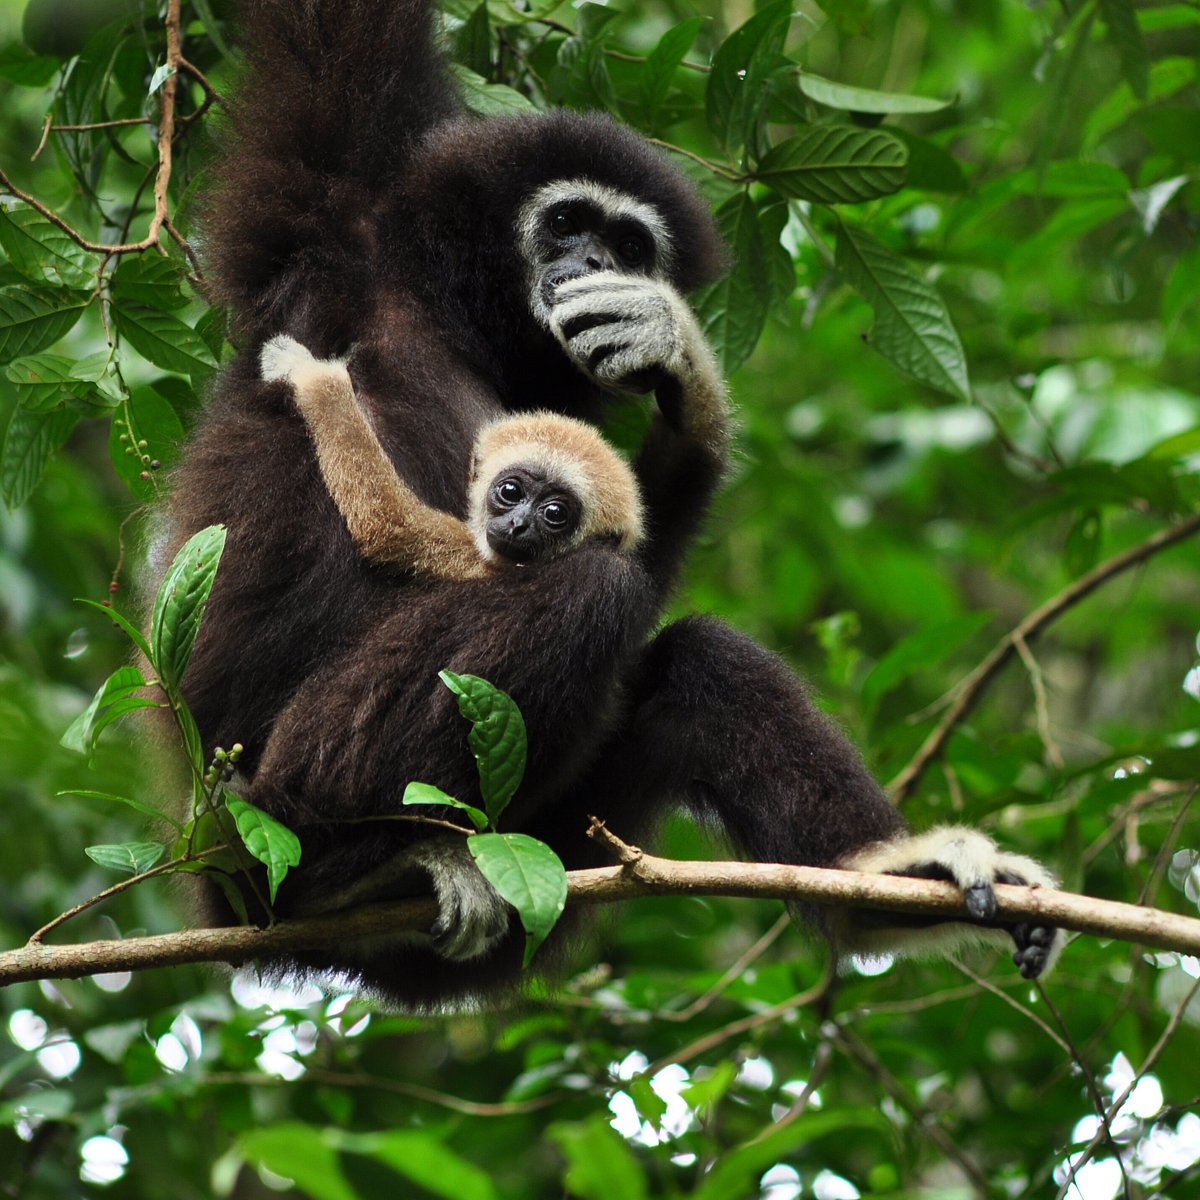 Gibbon Rehabilitation Project, Таланг: лучшие советы перед посещением -  Tripadvisor